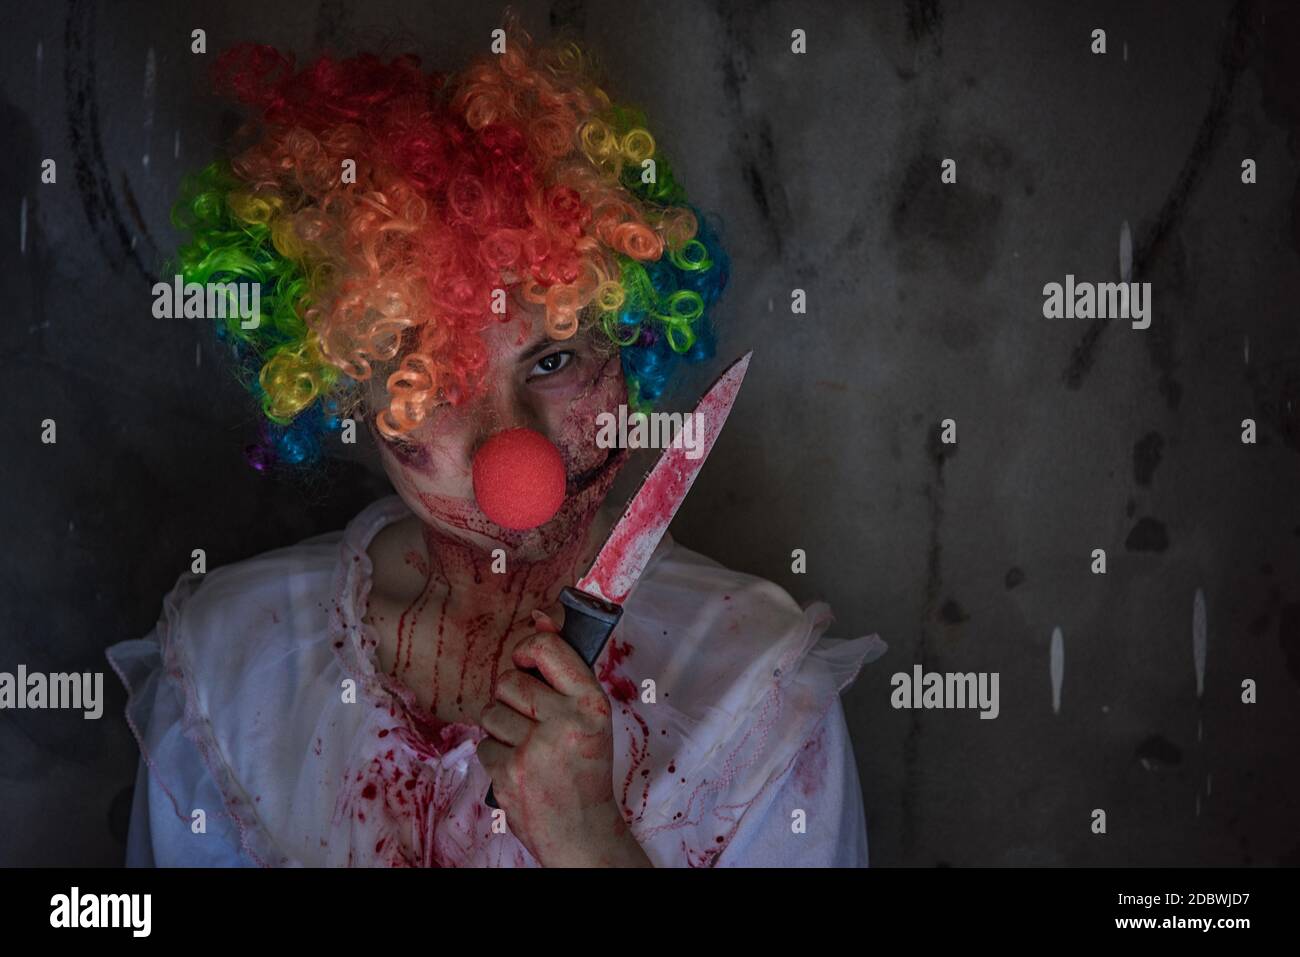 Asia joker ghost girl or Zombie holding knife, Halloween concept Stock Photo